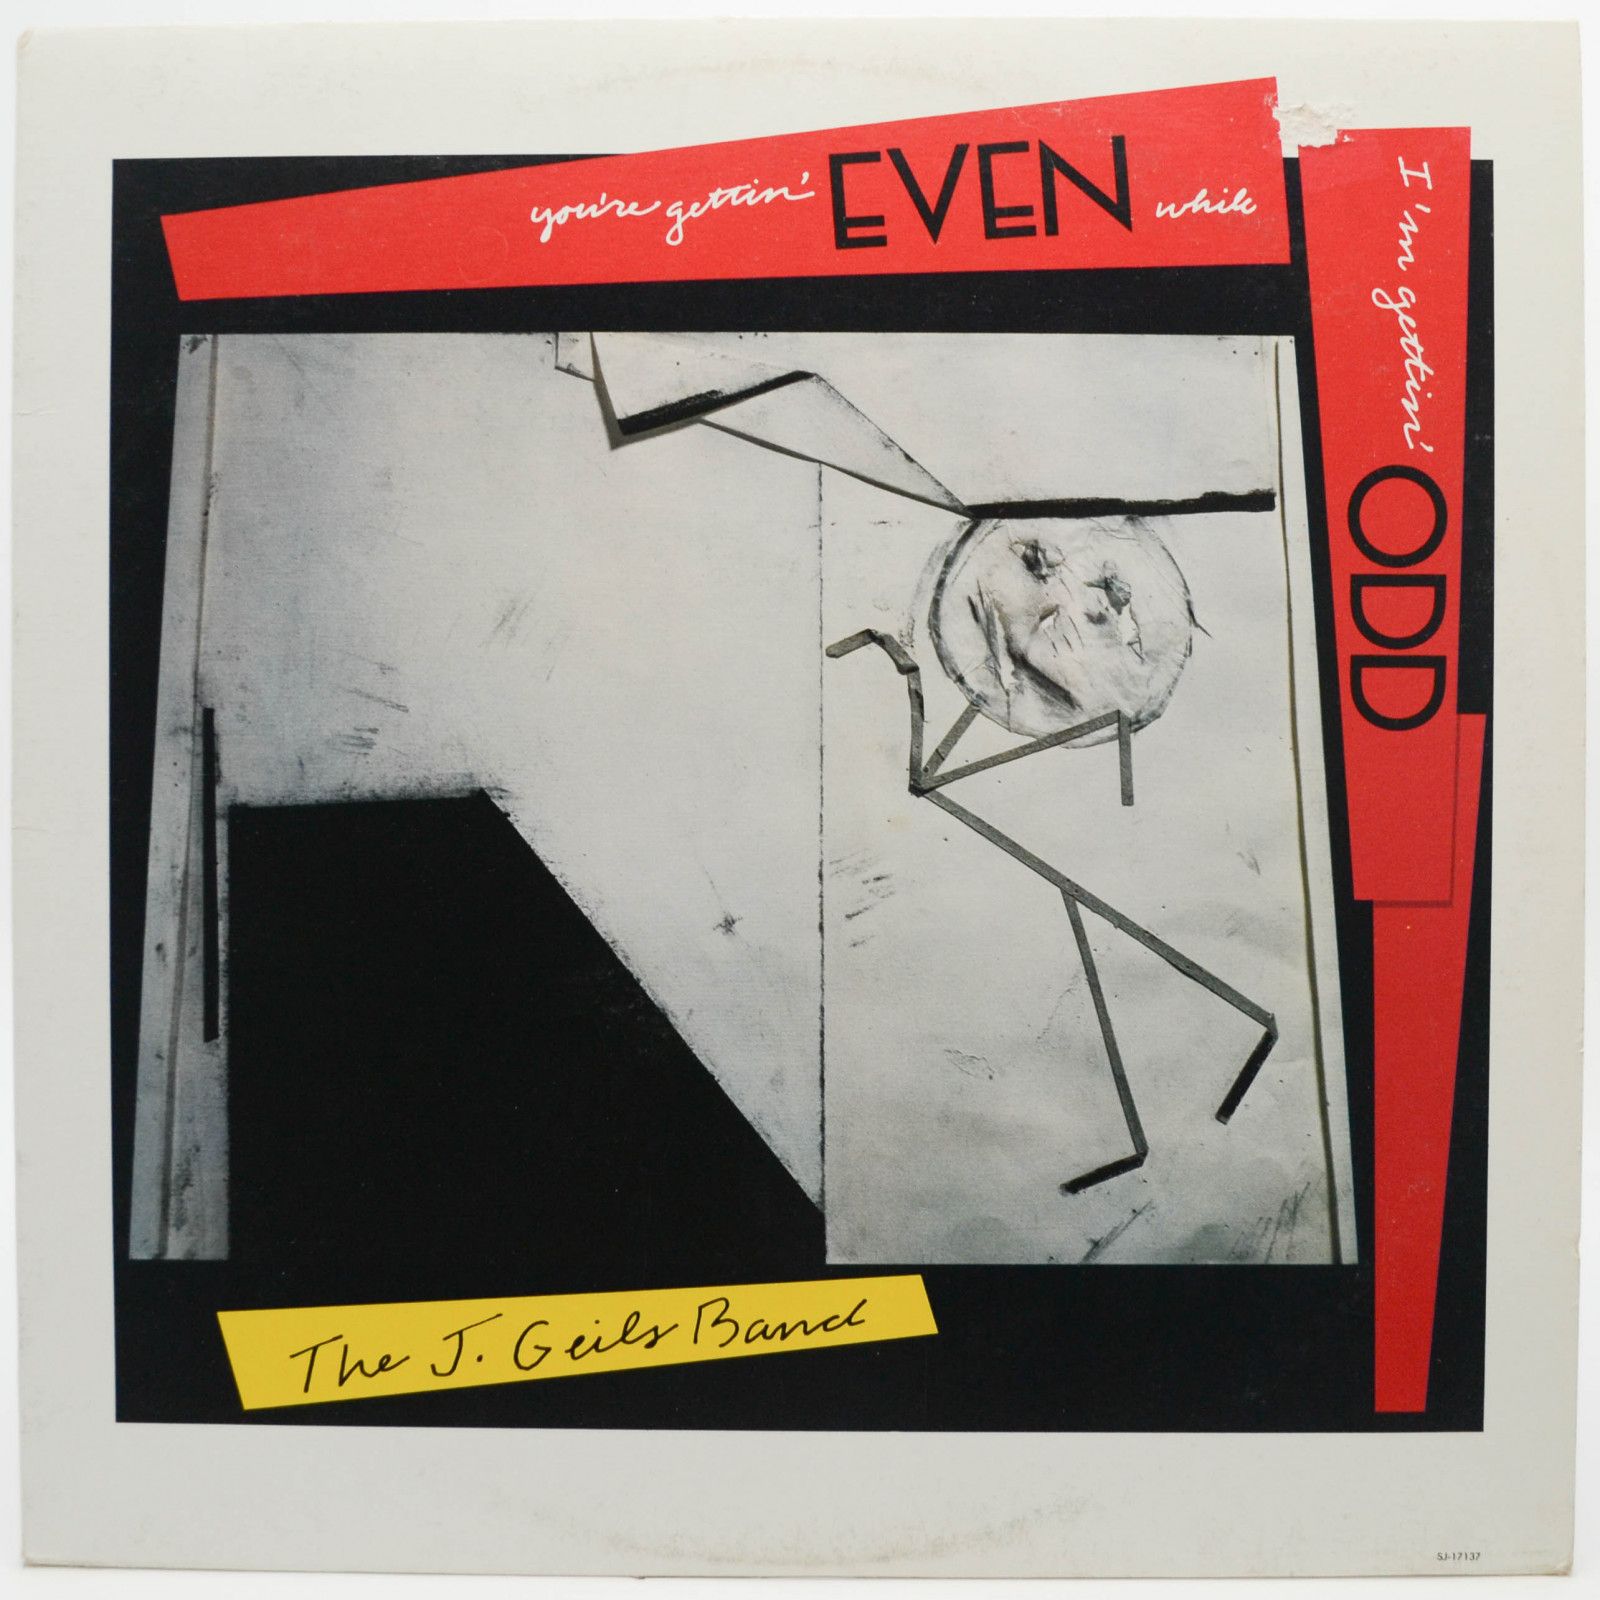 J. Geils Band — You're Gettin' Even While I'm Gettin' Odd, 1984